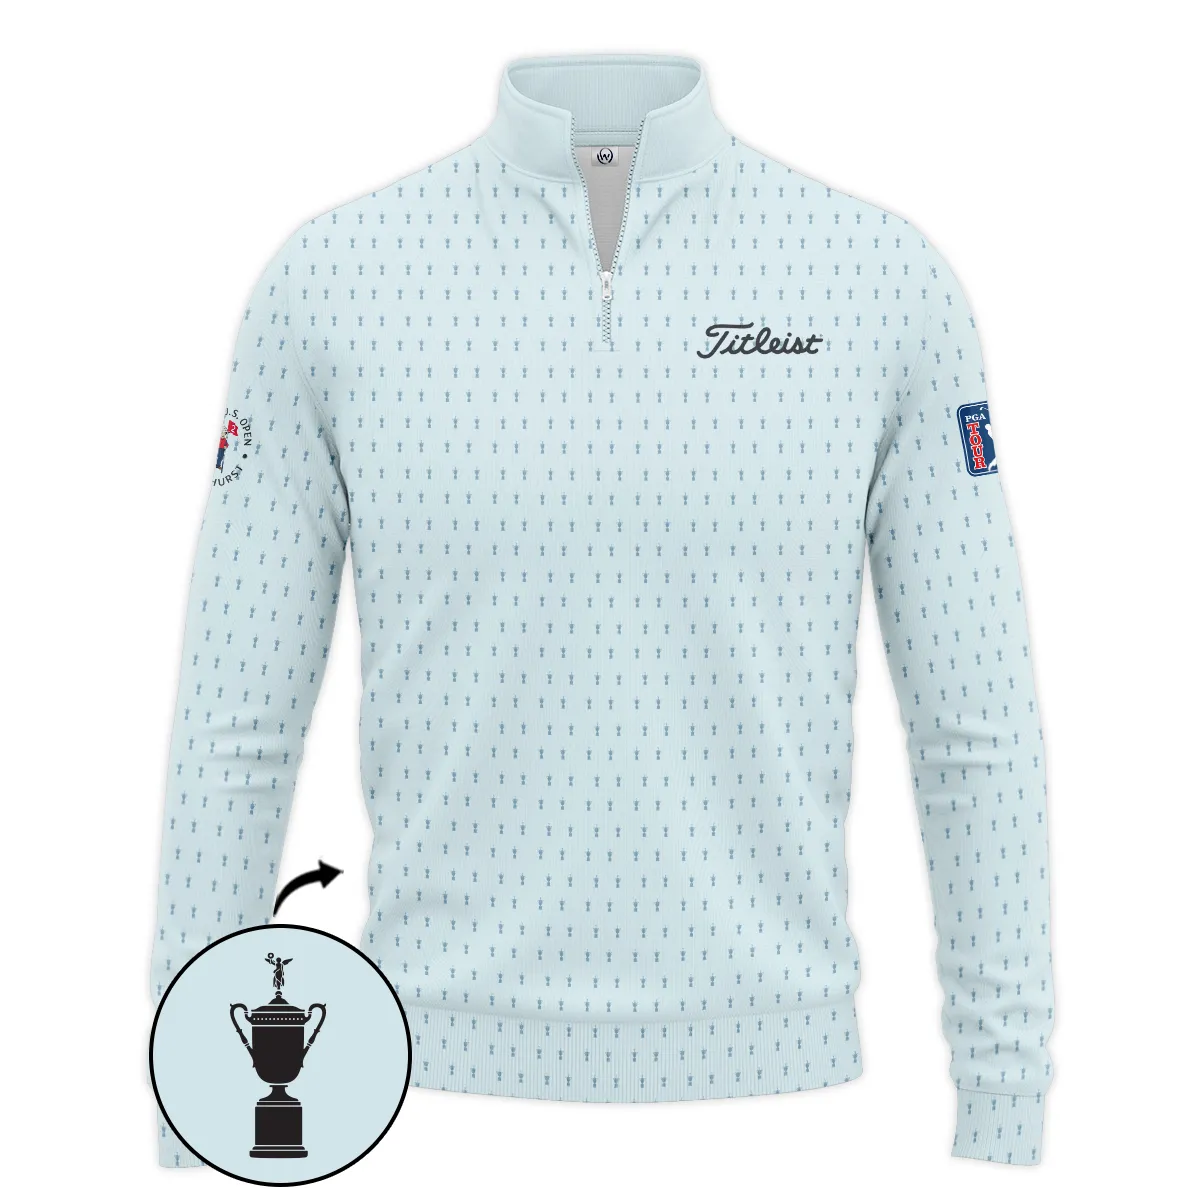 Golf Pattern Cup Light Blue Mix Green 124th U.S. Open Pinehurst Pinehurst Titleist Quarter-Zip Jacket Style Classic